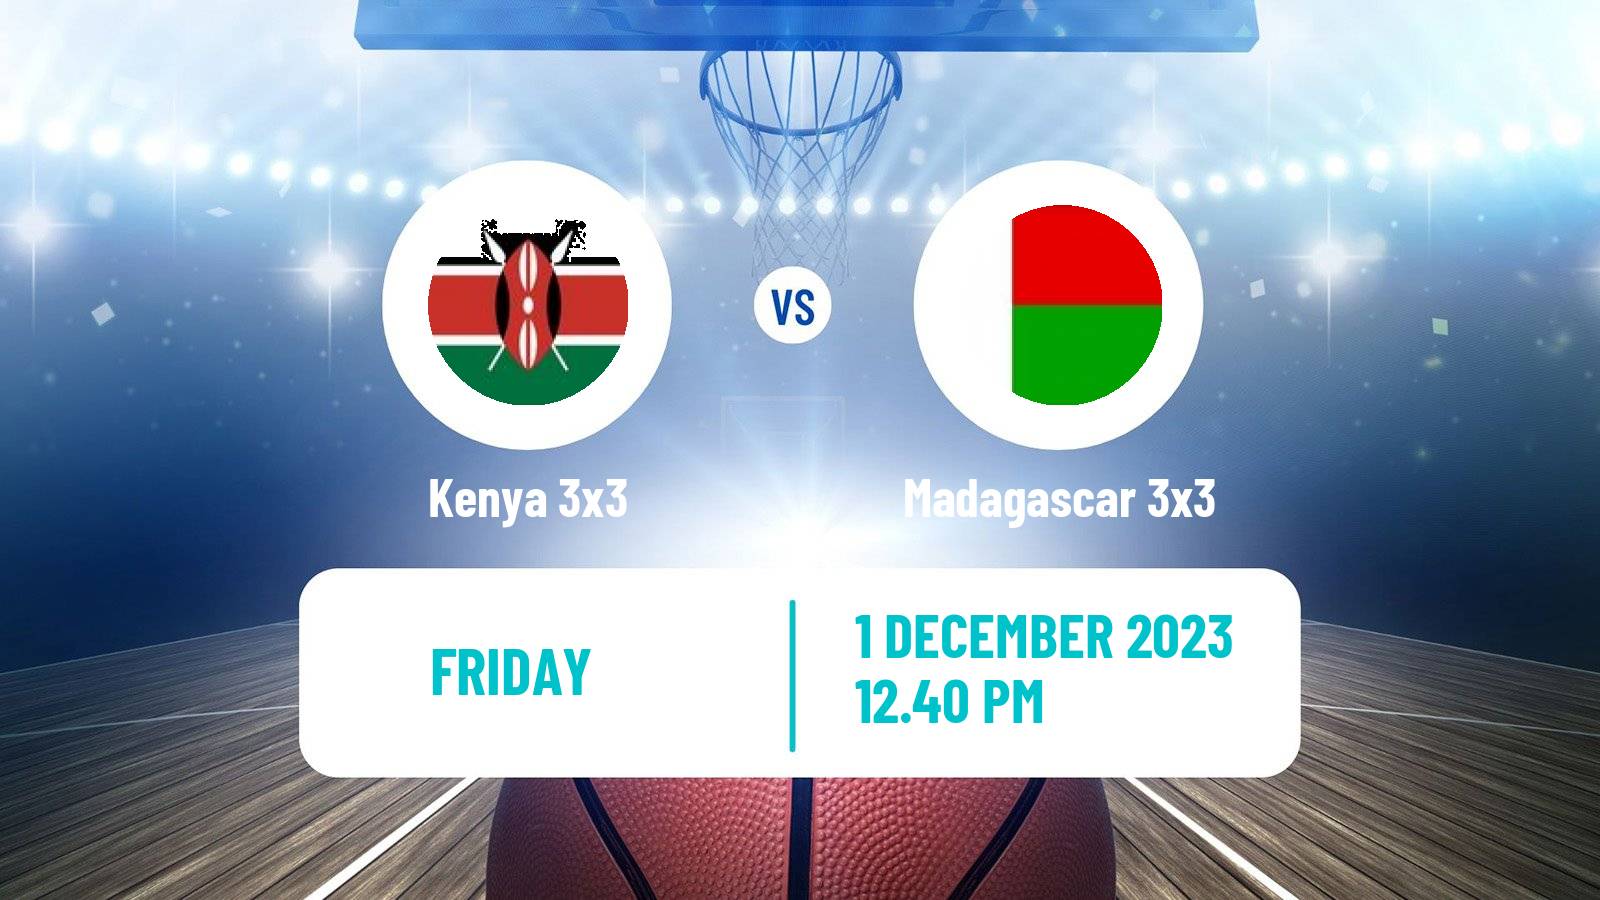 Basketball Africa Cup 3x3 Kenya 3x3 - Madagascar 3x3